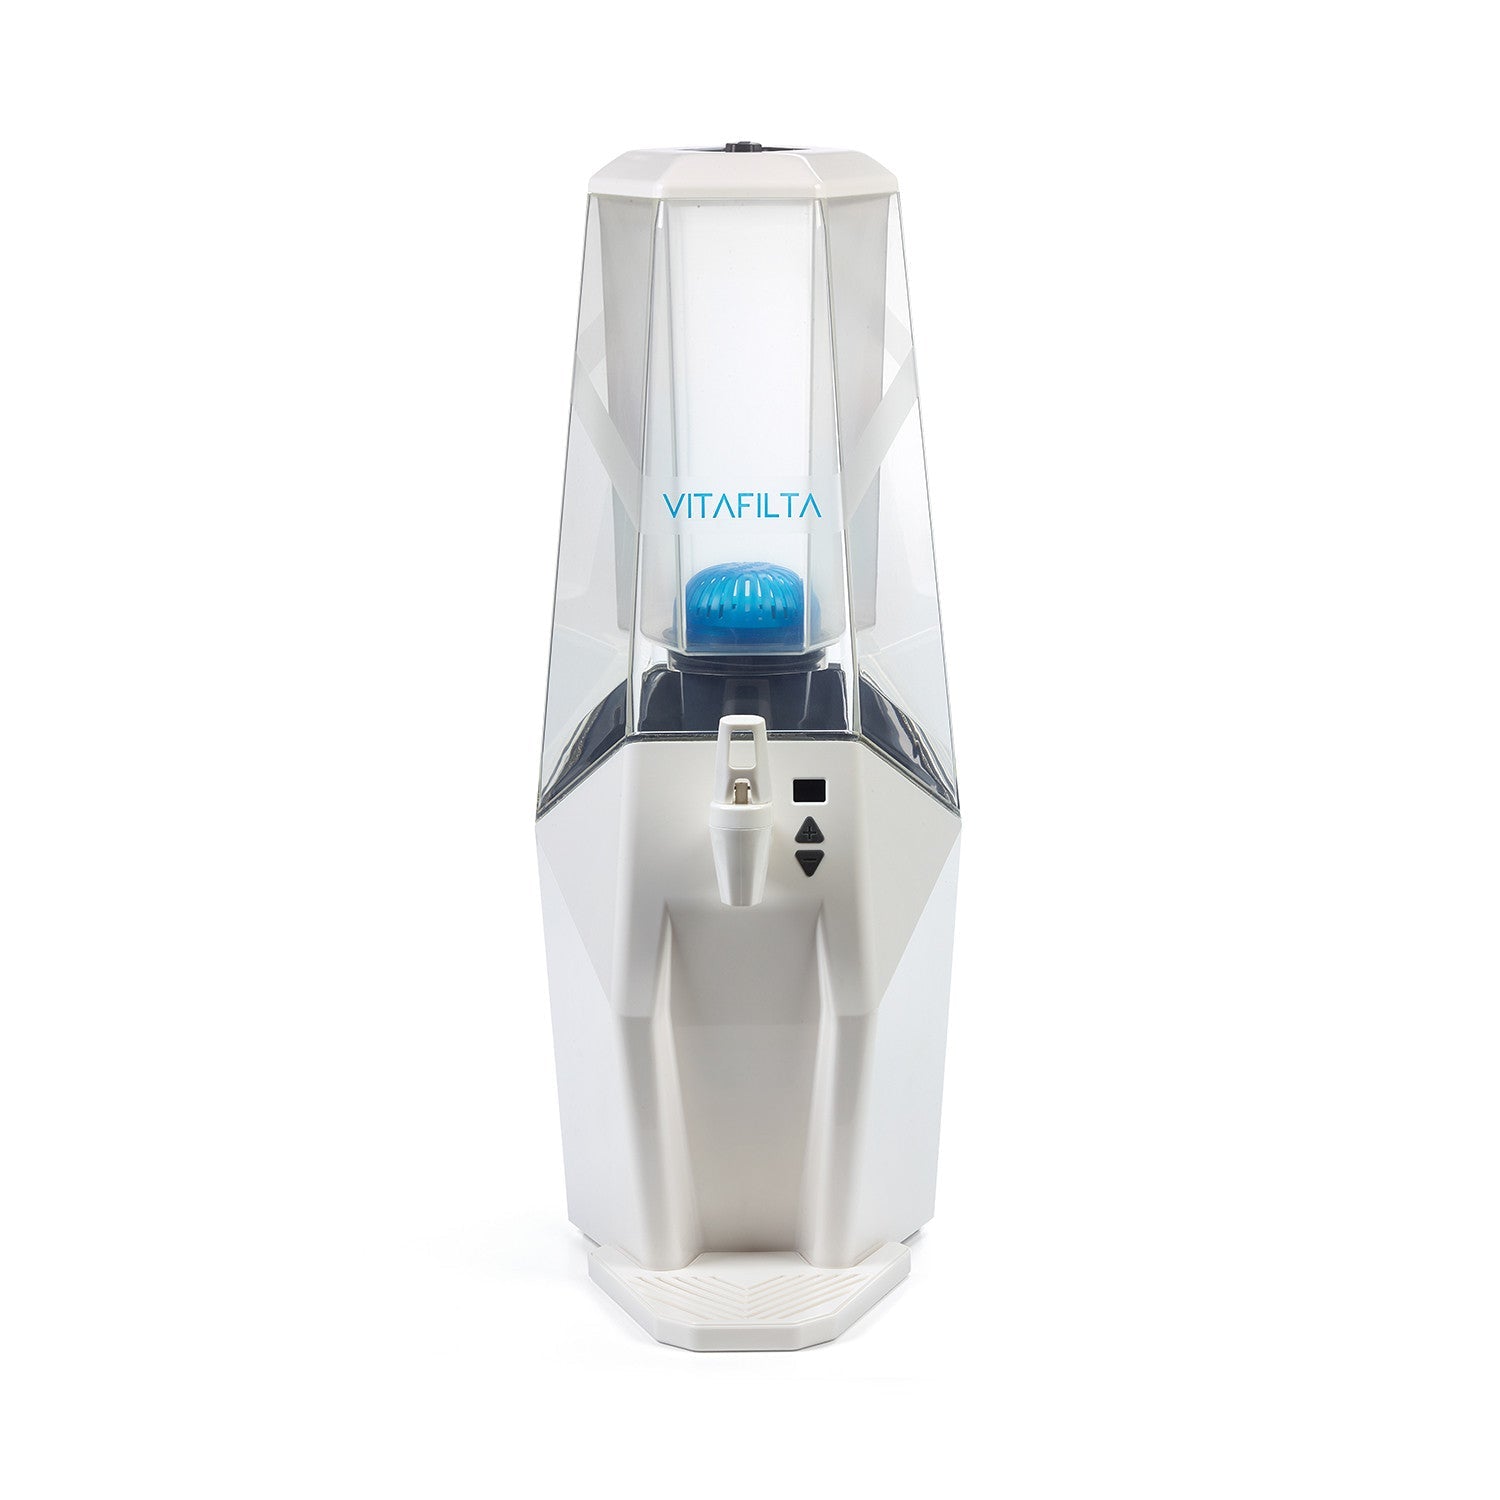 VitaFilta Water Cooler + Filter // Includes 1 Filter